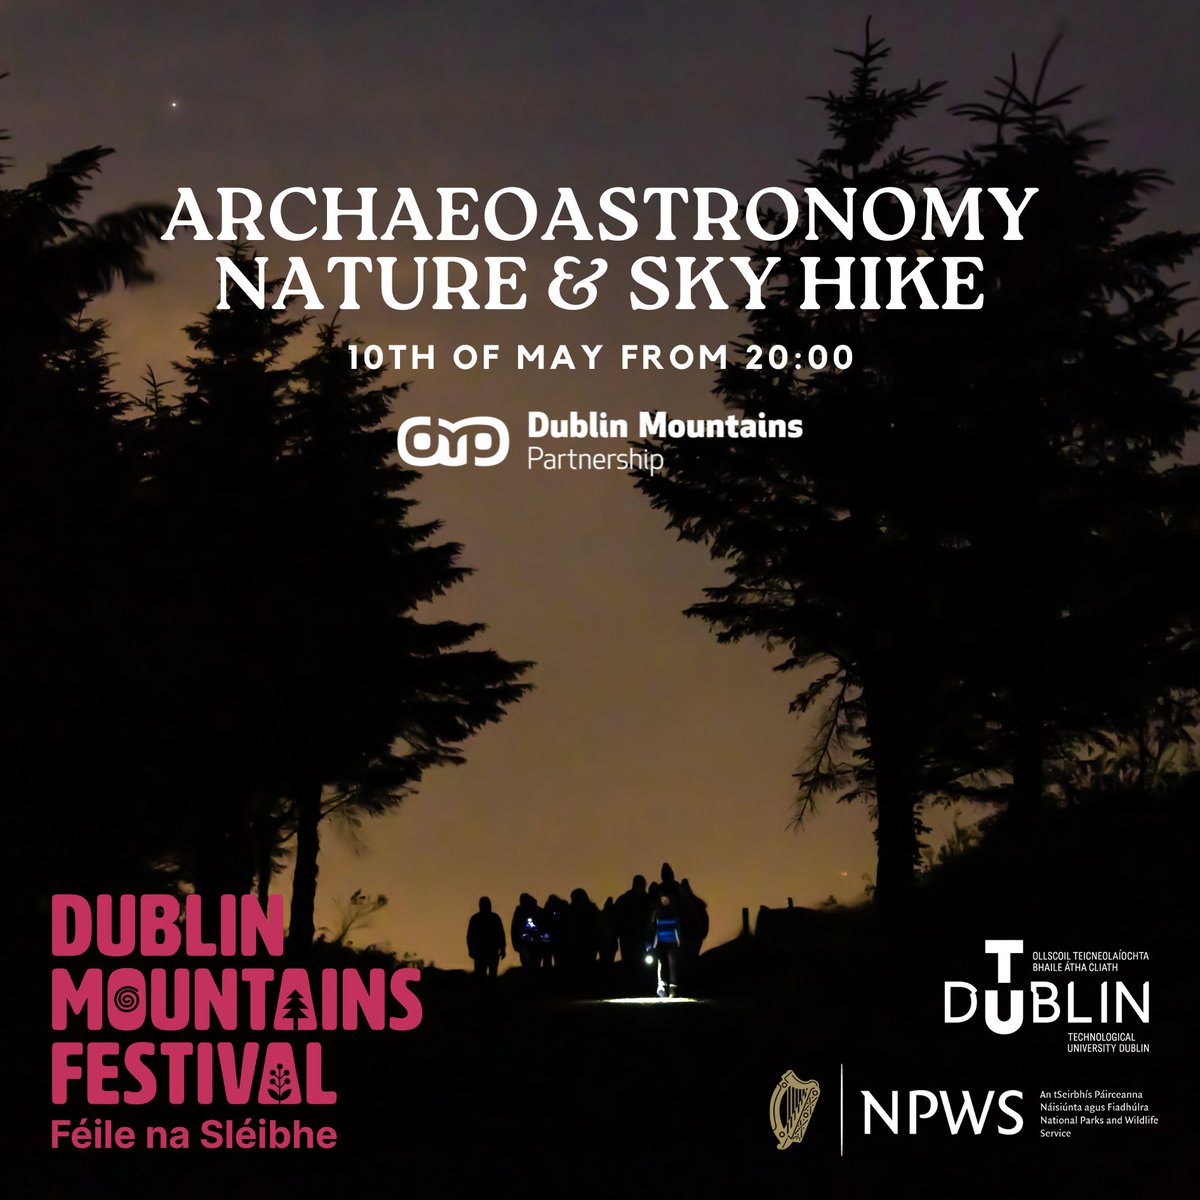 Dublin Mountains Festival: Archaeoastronomy, Nature & Sky Night Hike ✨💫 10th of May from 20:00 at Ticknock. Details & bookings at dublinmountains.ie @TUdublin @NPWSIreland @UCDEarth #DublinMountainsFestival